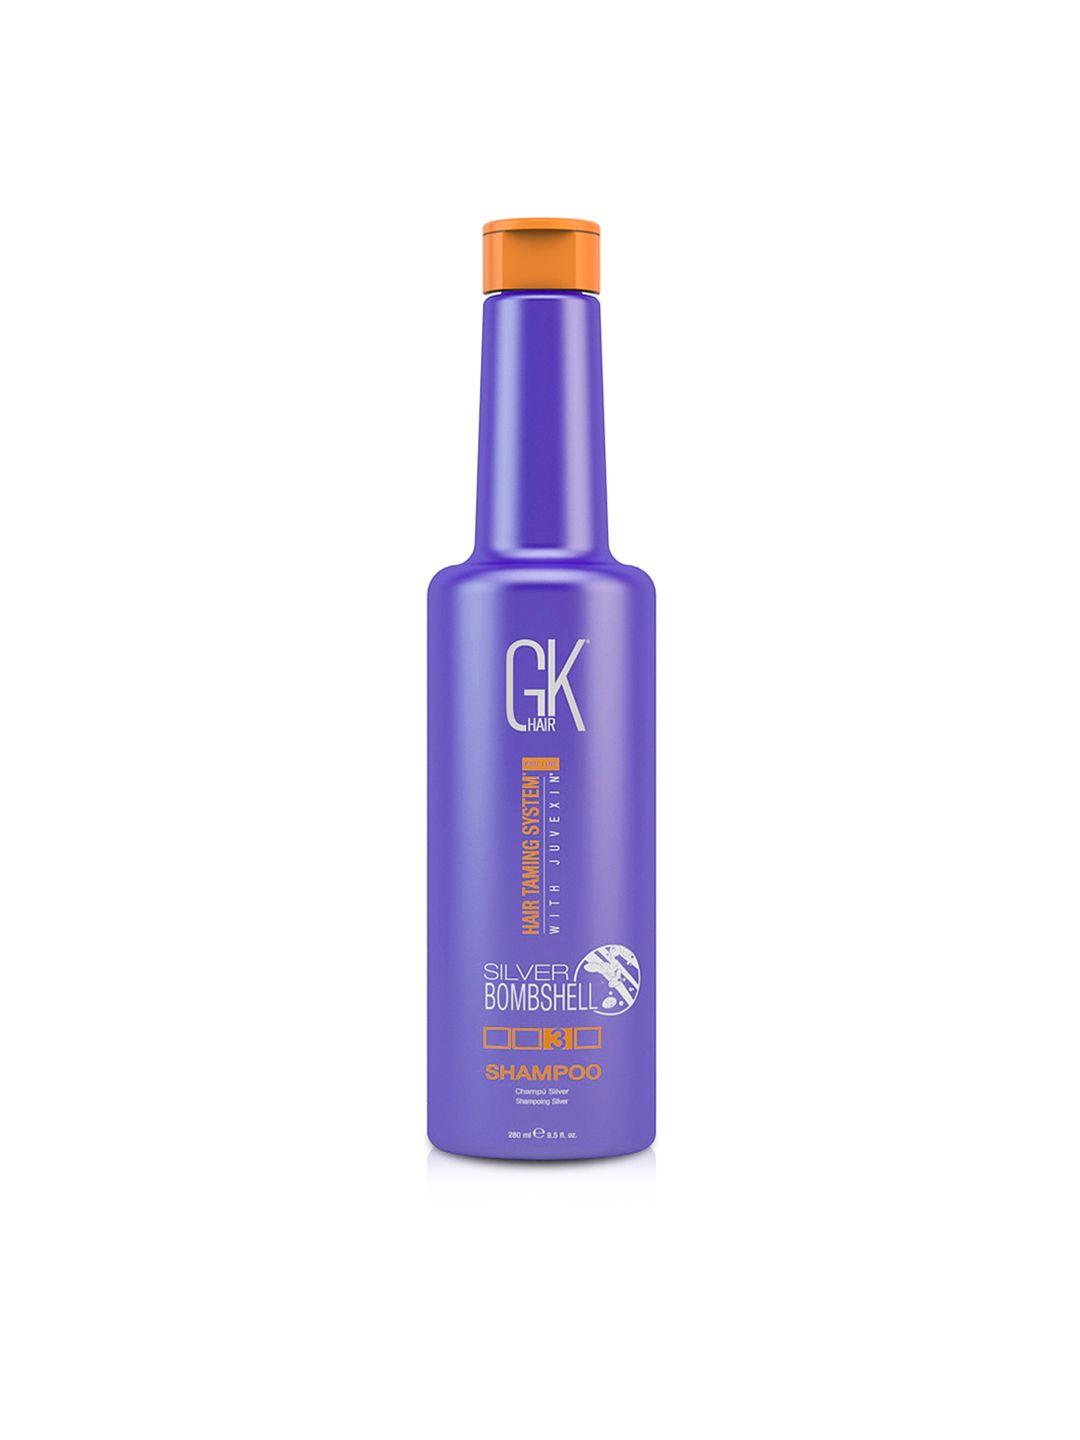 gk hair taming system with juvexin global keratin silver bombshell shampoo 280 ml